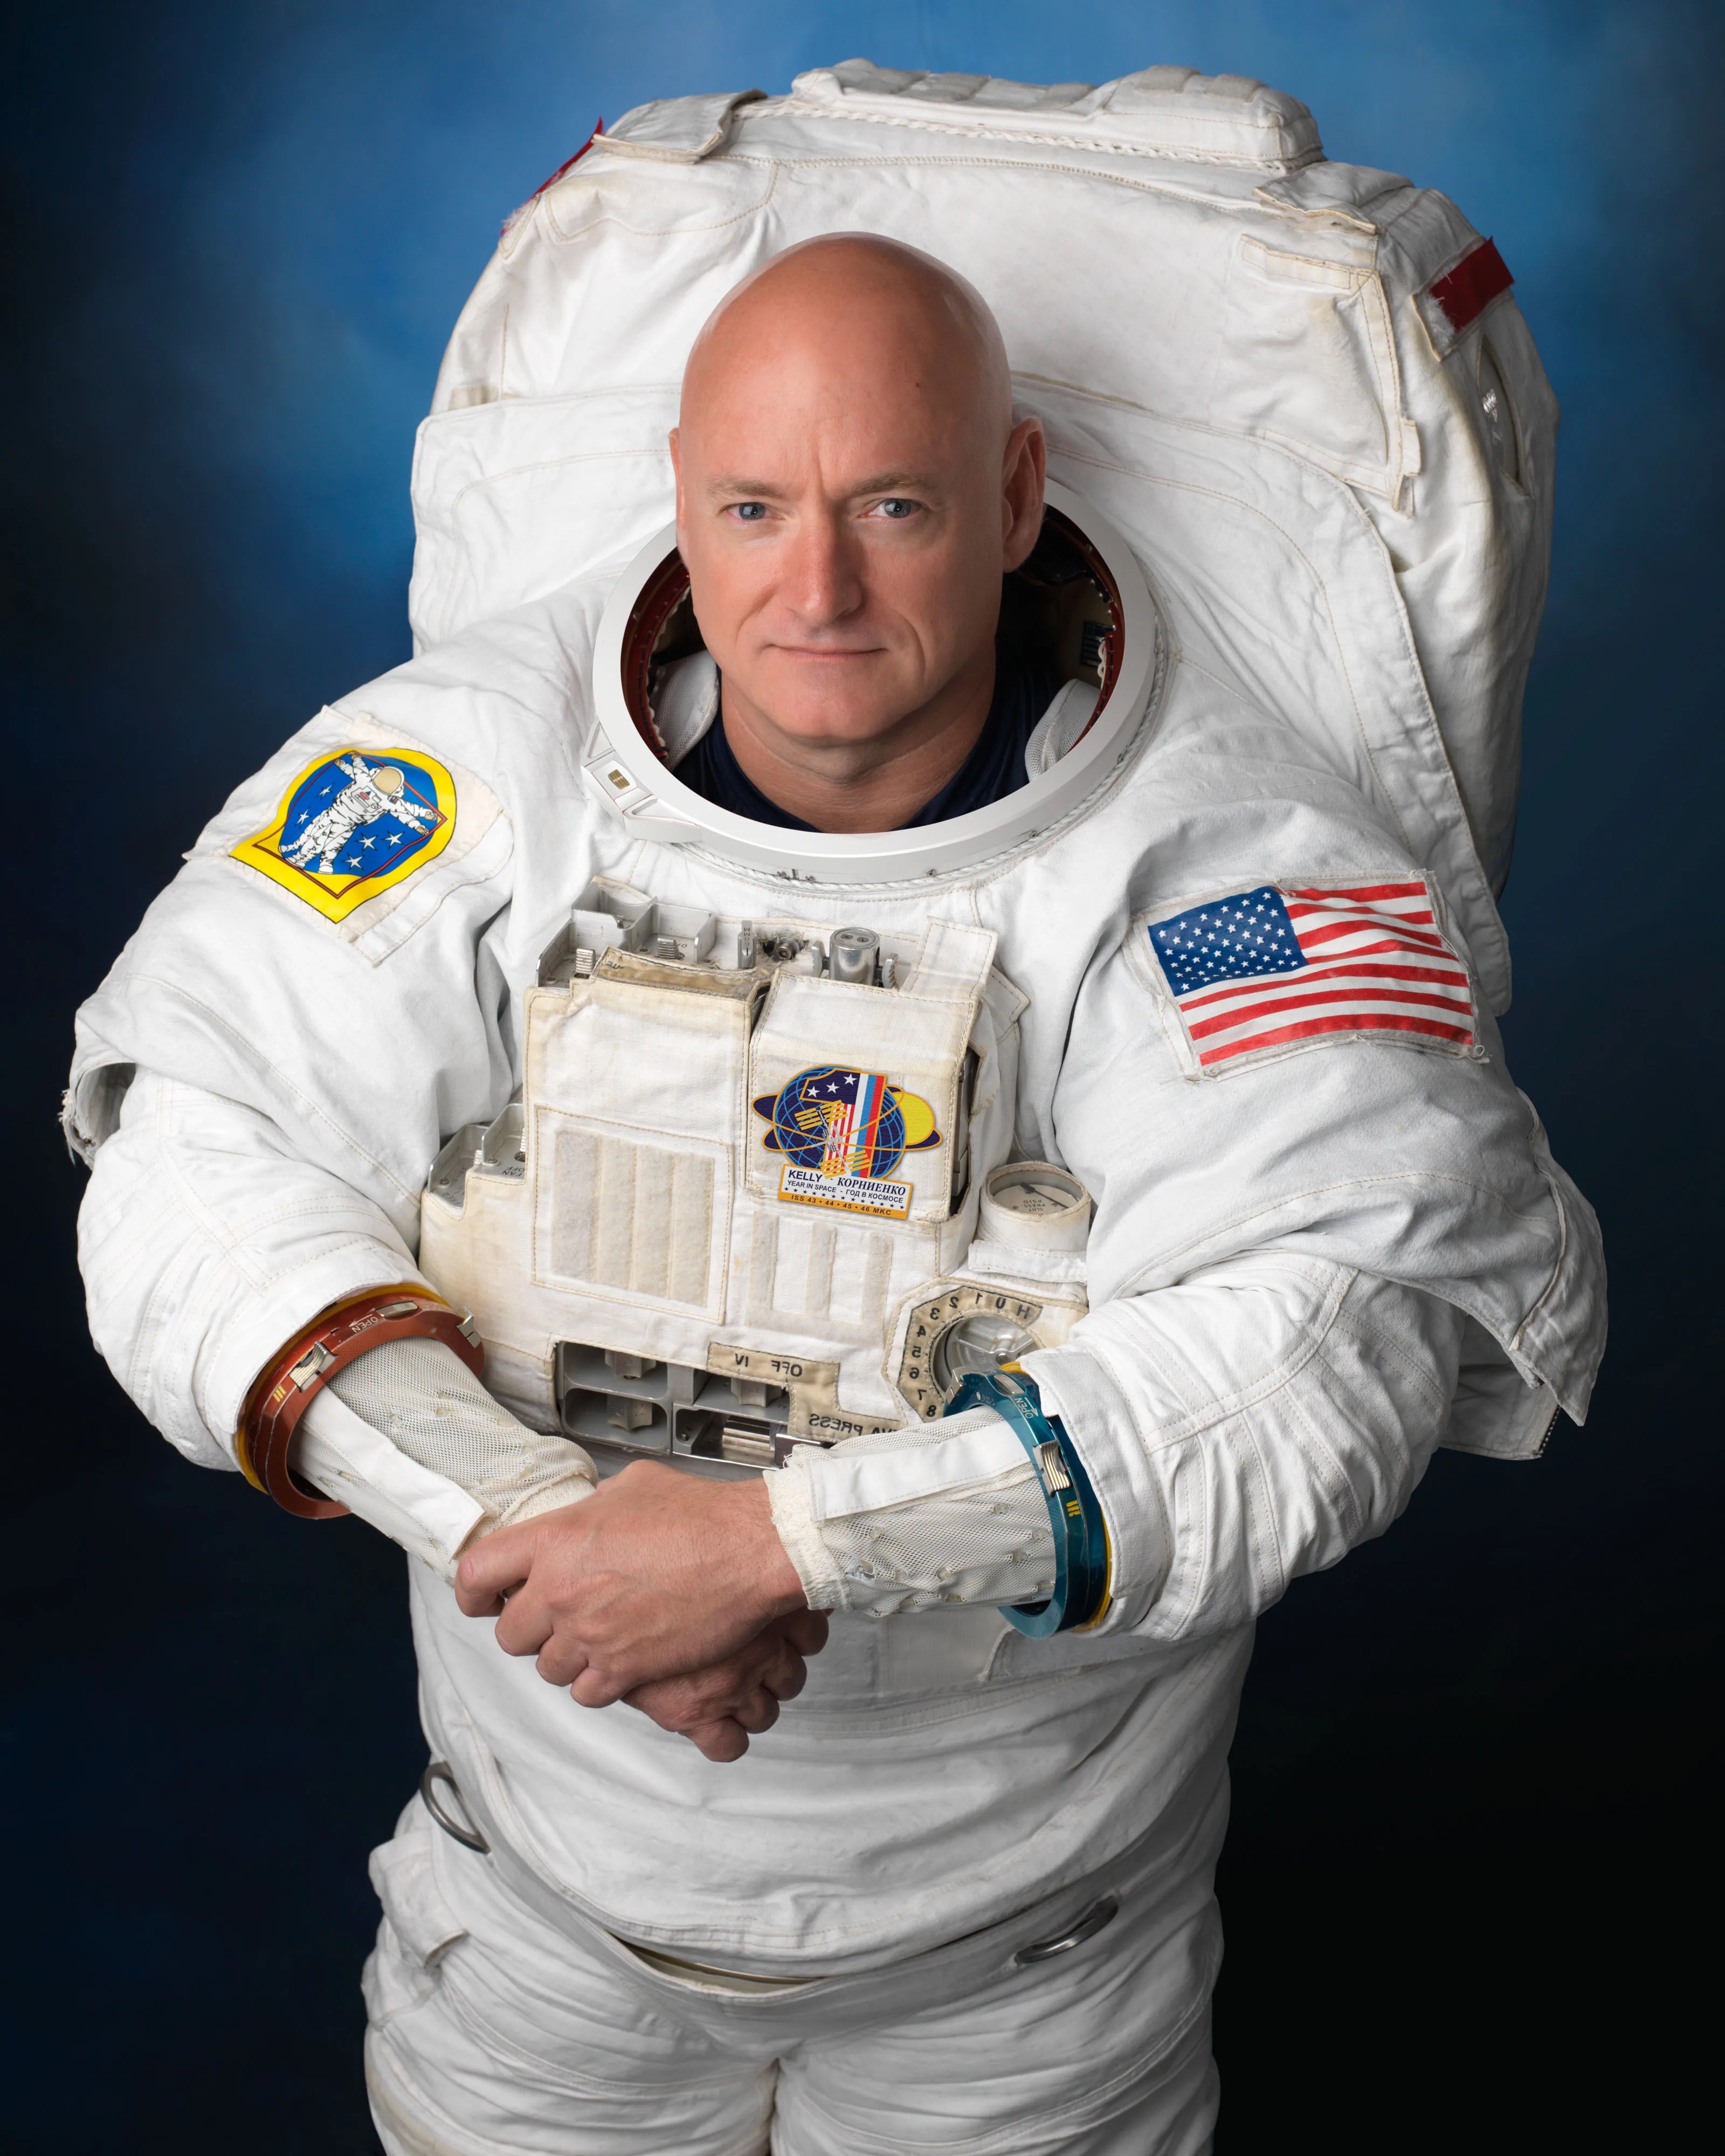 Official astronaut portrait of Scott Kelly.